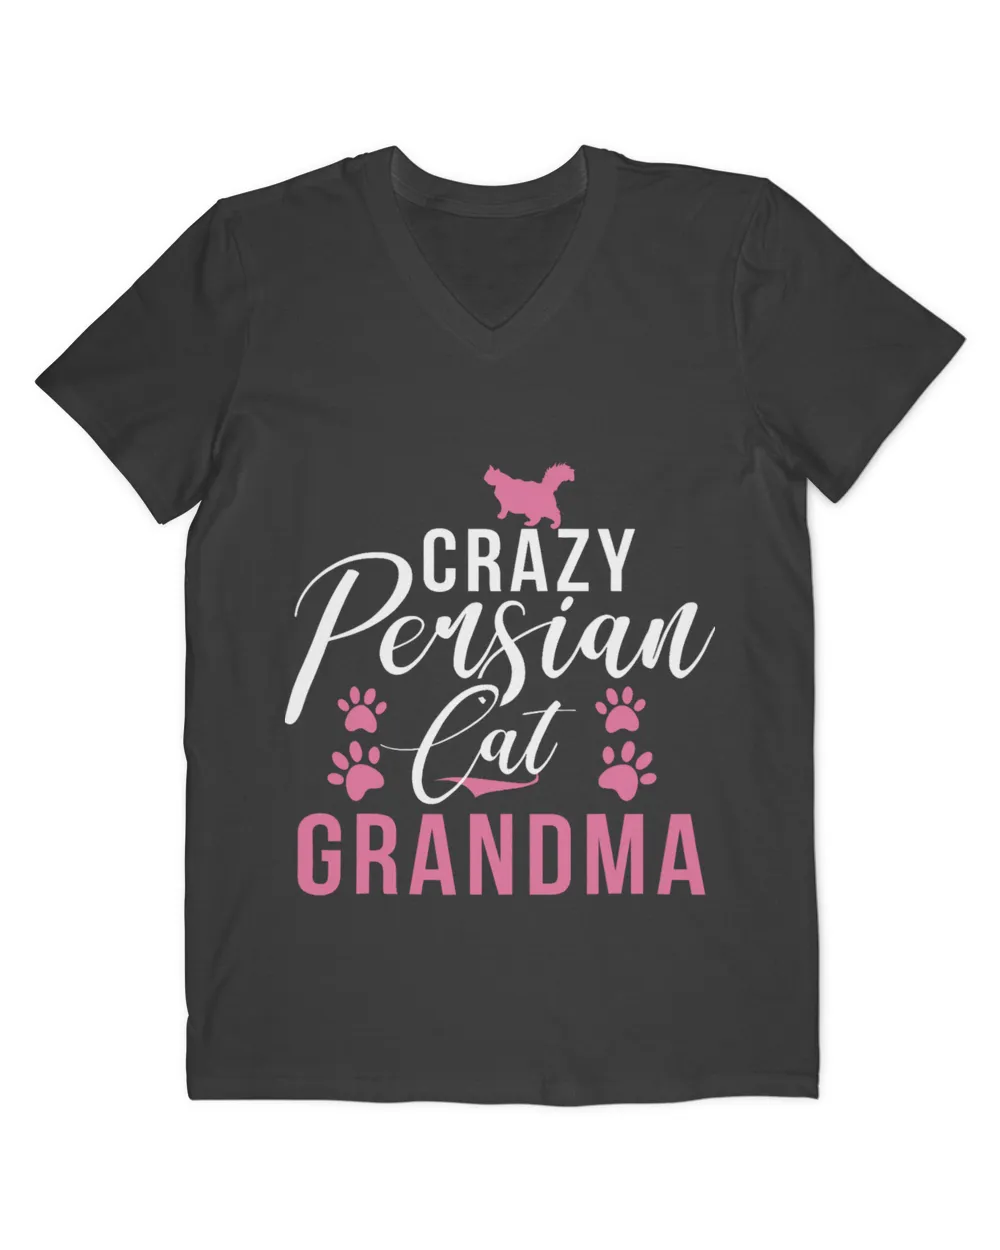 Crazy Persian Cat Grandma